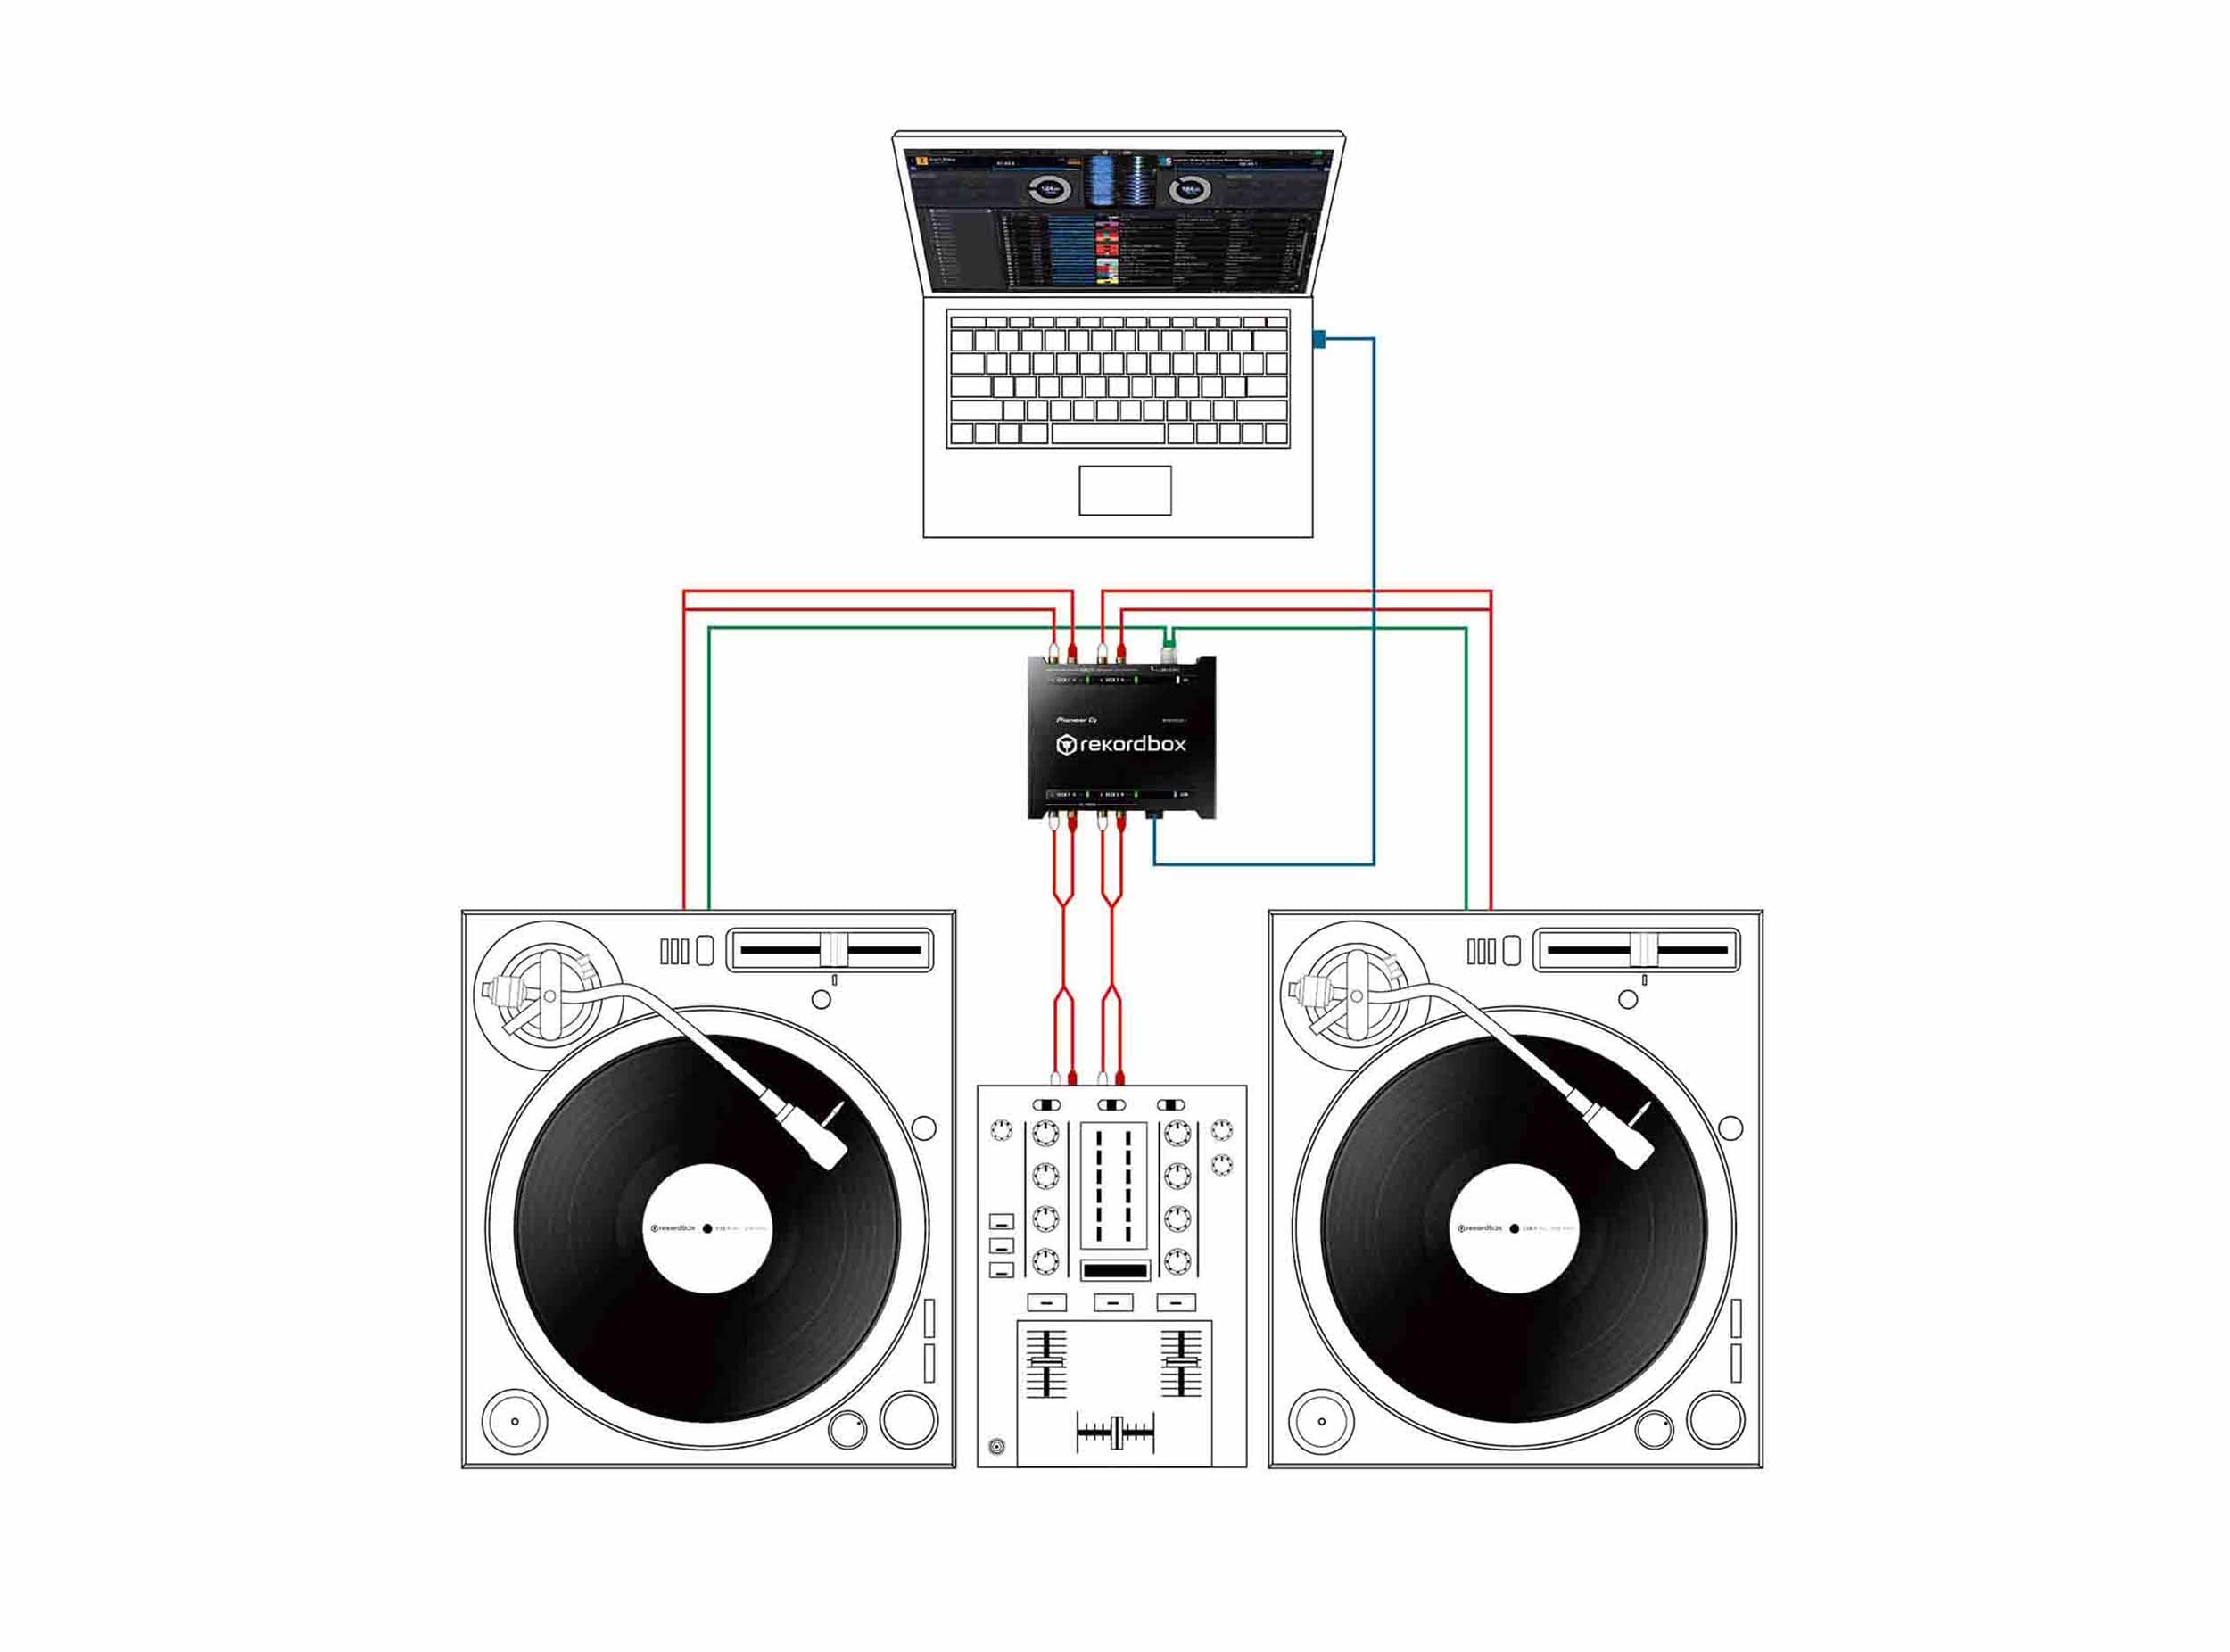 Pioneer DJ INTERFACE 2, 2-Channel Audio Interface for Rekordbox Dvs by Pioneer DJ